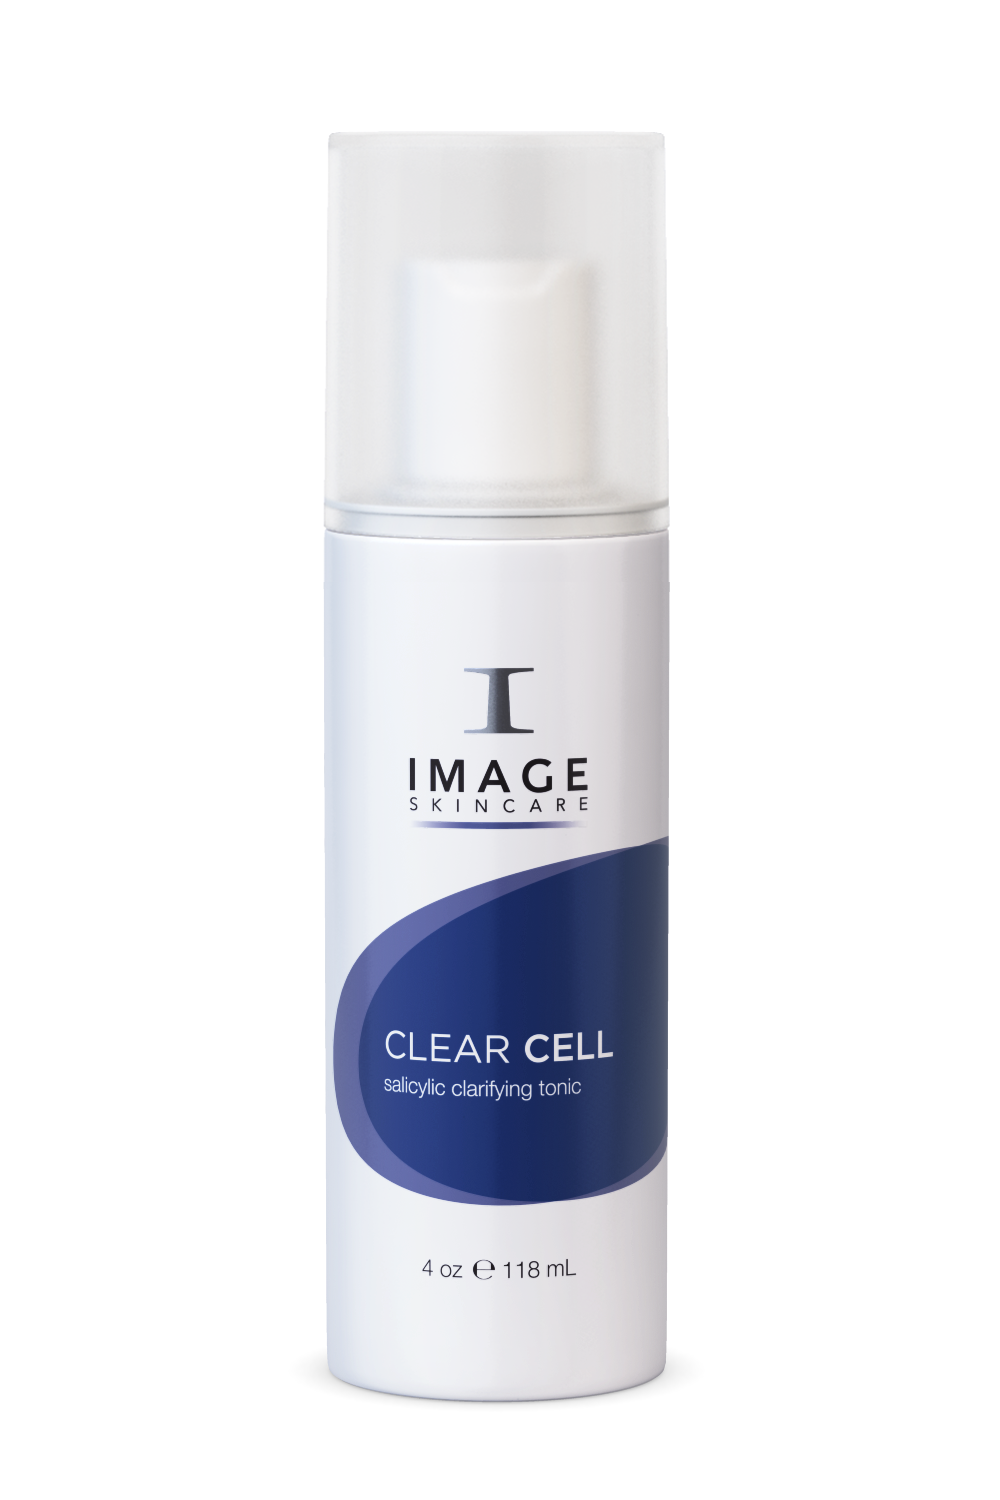 Image Skincare салициловый тоник. Image Clear Cell очищающий салициловый гель. Тоник для жирной кожи. Тоник для лица для жирной кожи. Clear cell